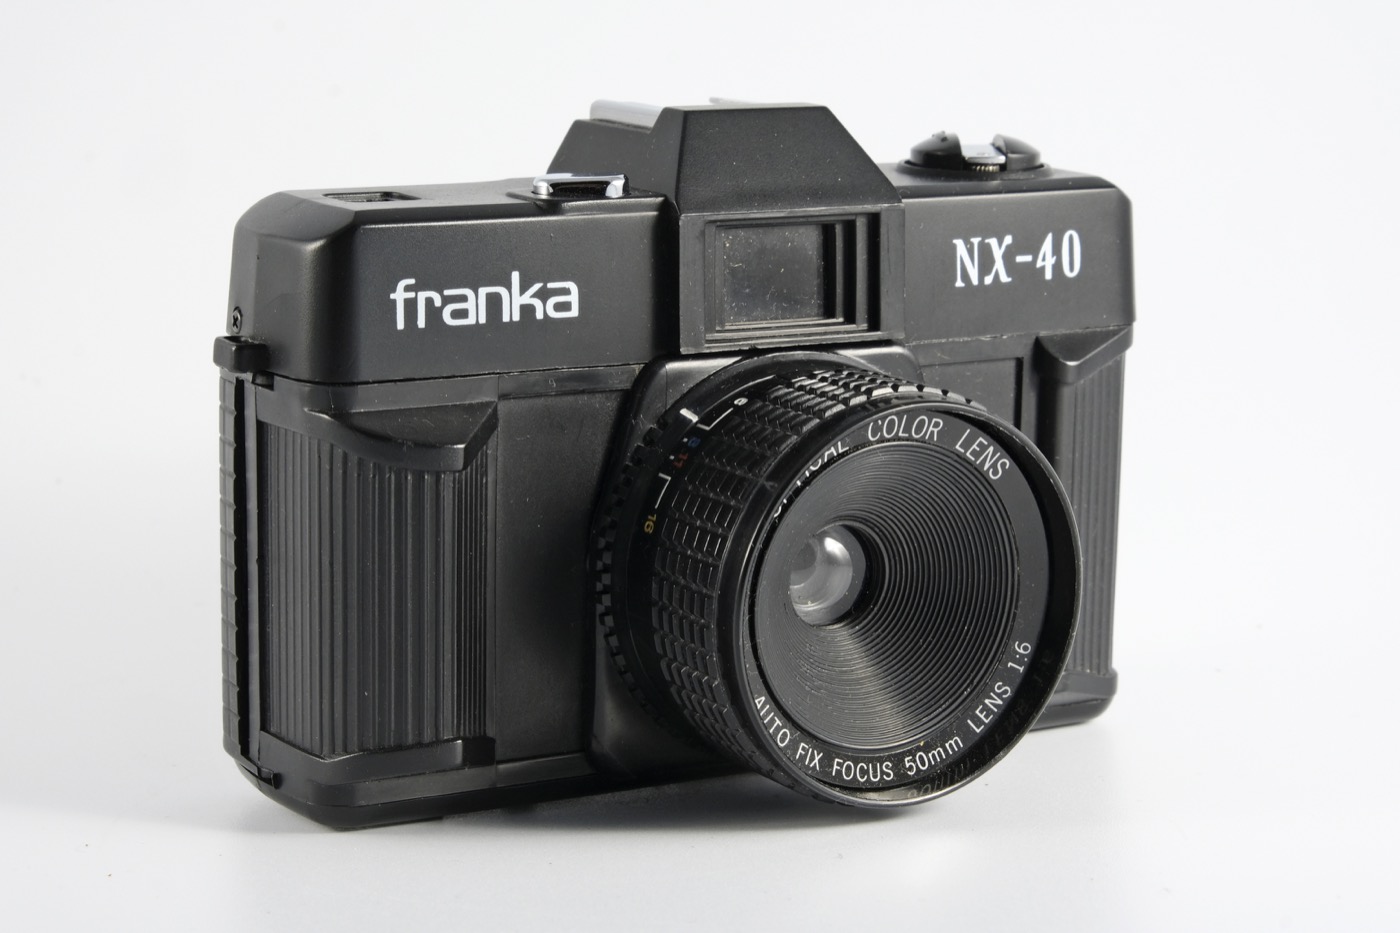 Franka NX-40 camera